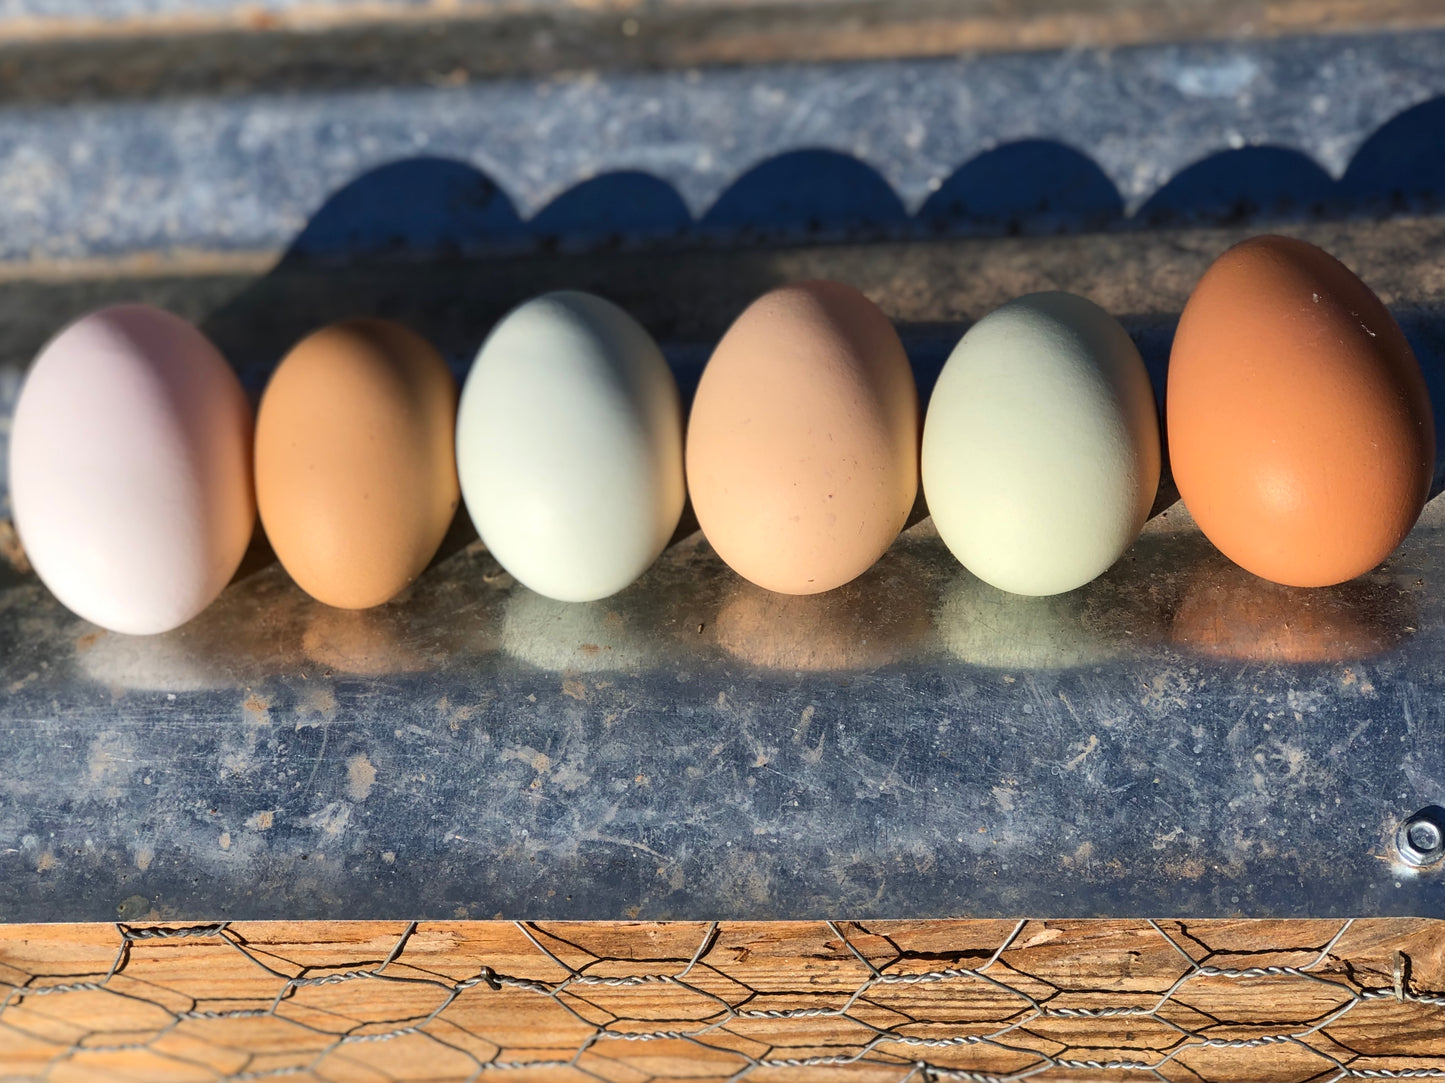 One dozen eggs